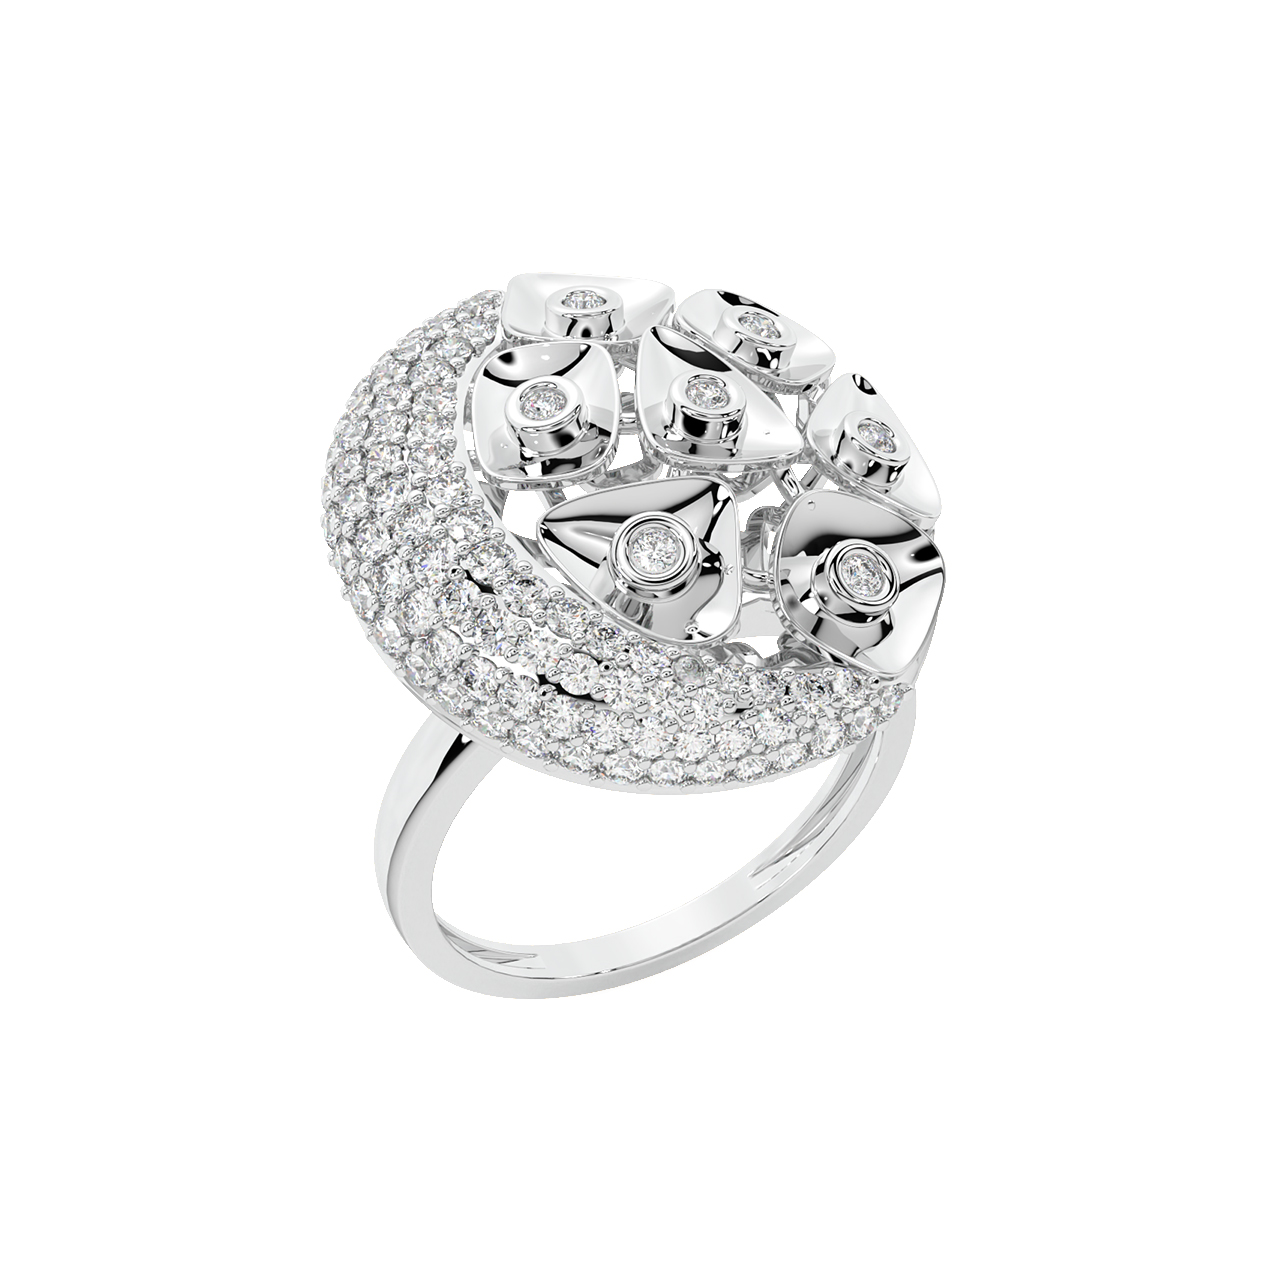 Ovary Design Diamond Ring